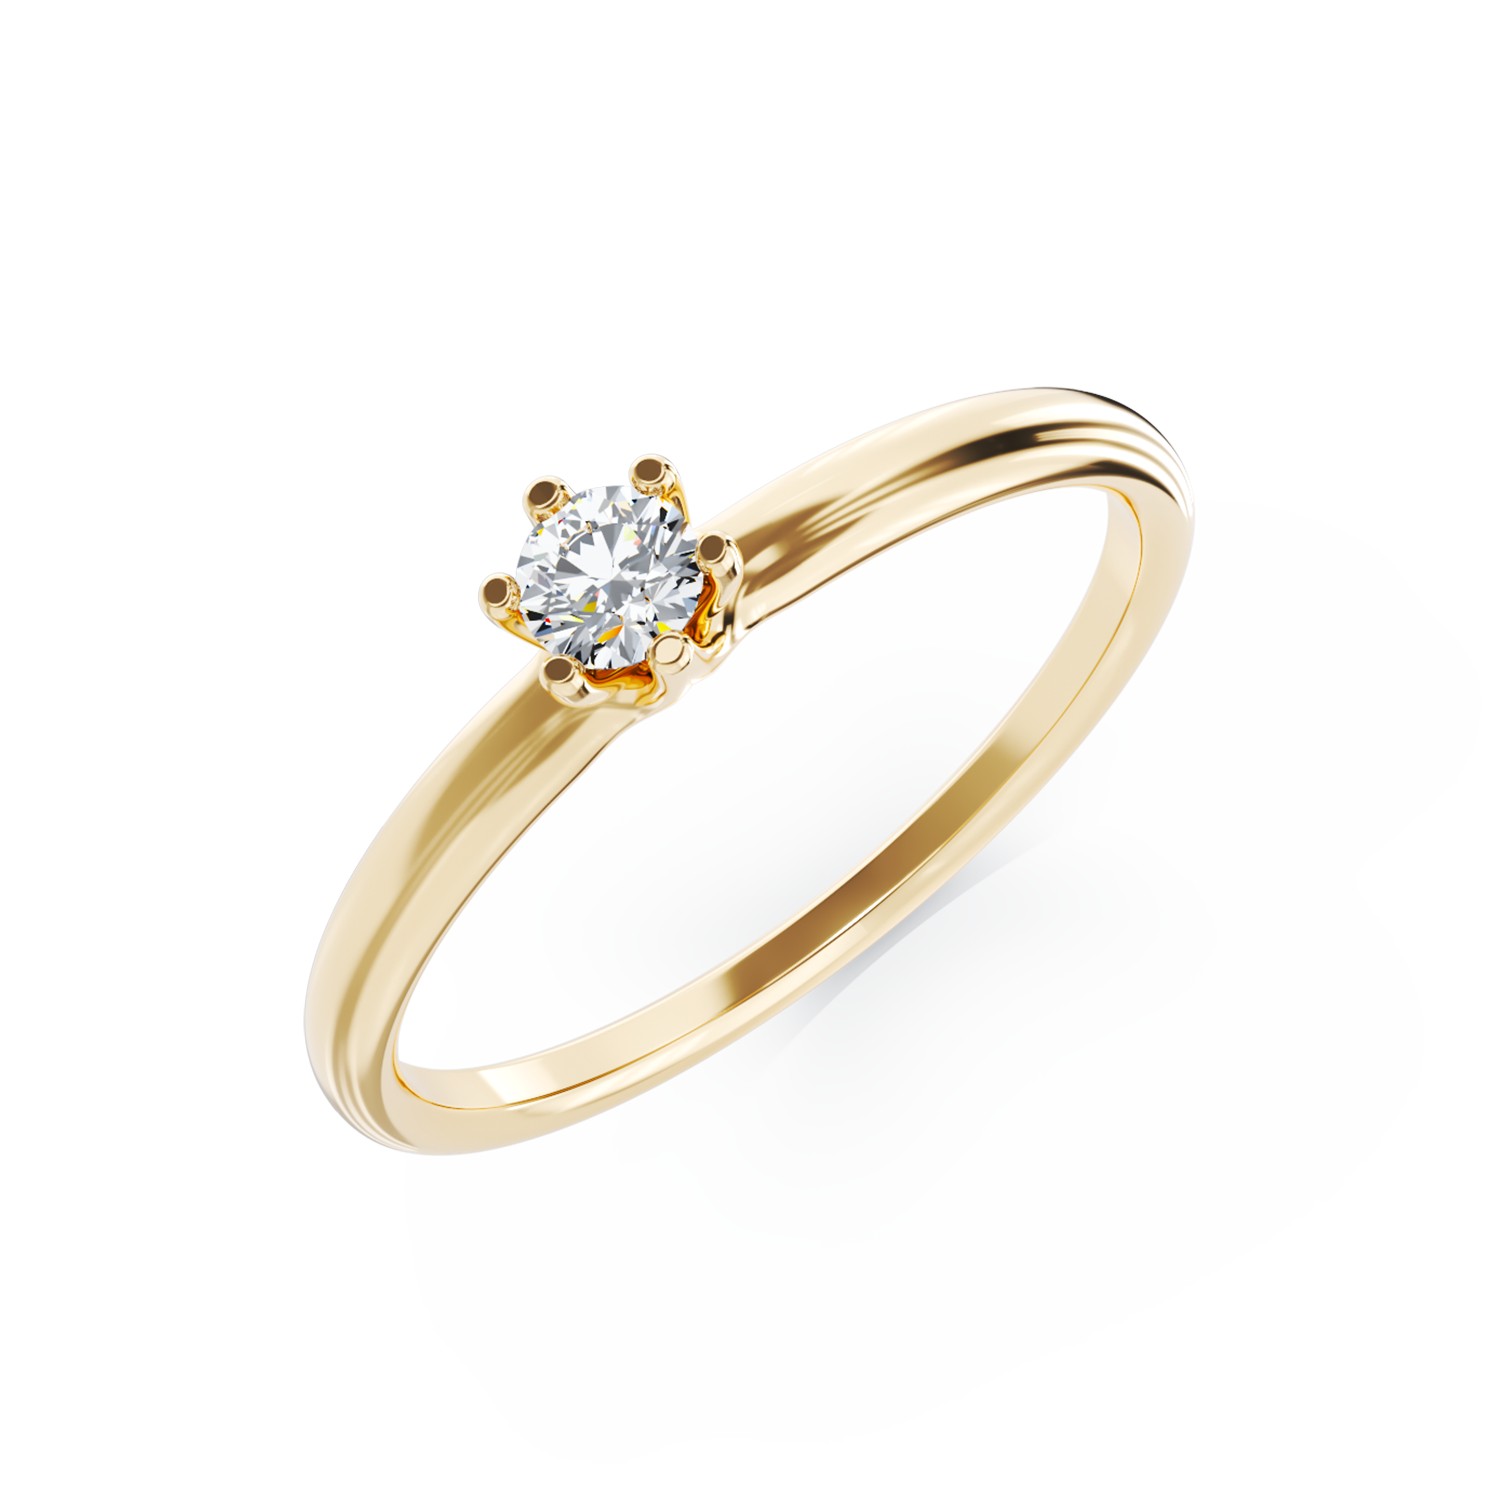 Inel de logodna din aur galben de 18K cu un diamant solitaire de 0.21ct